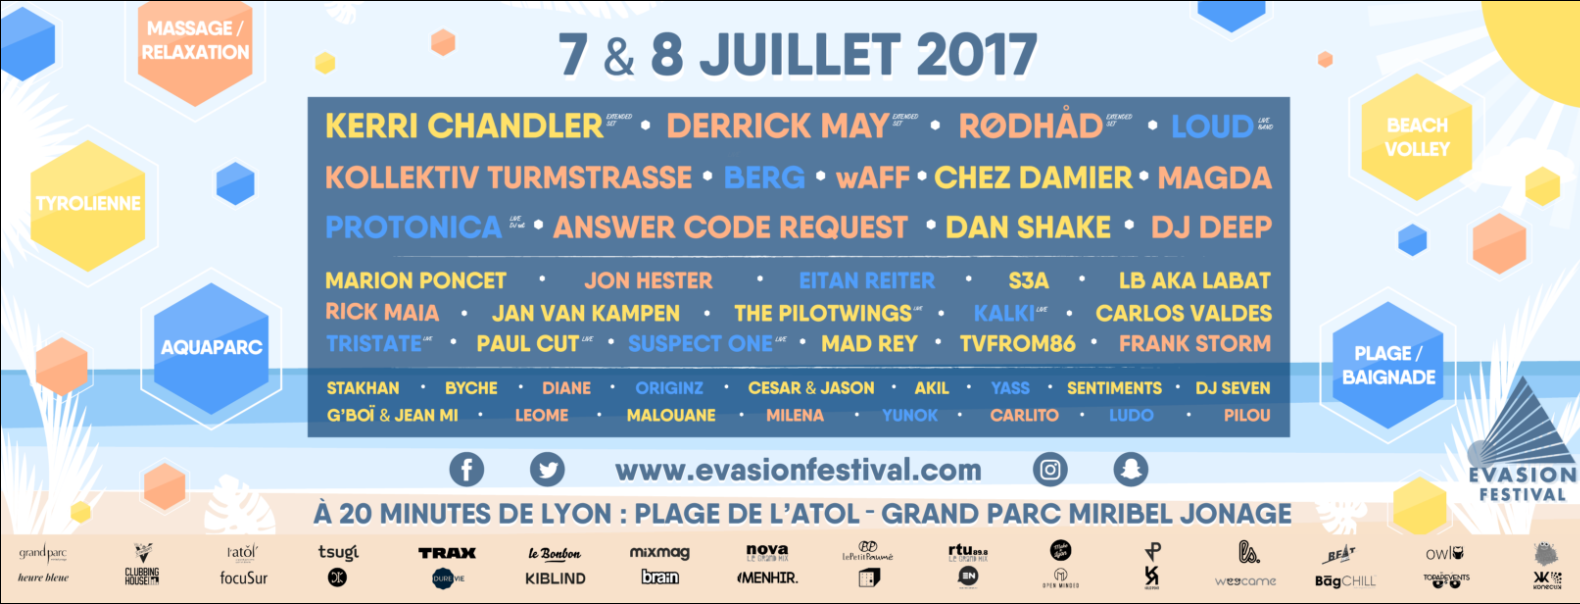 programmation festival evasion 2017